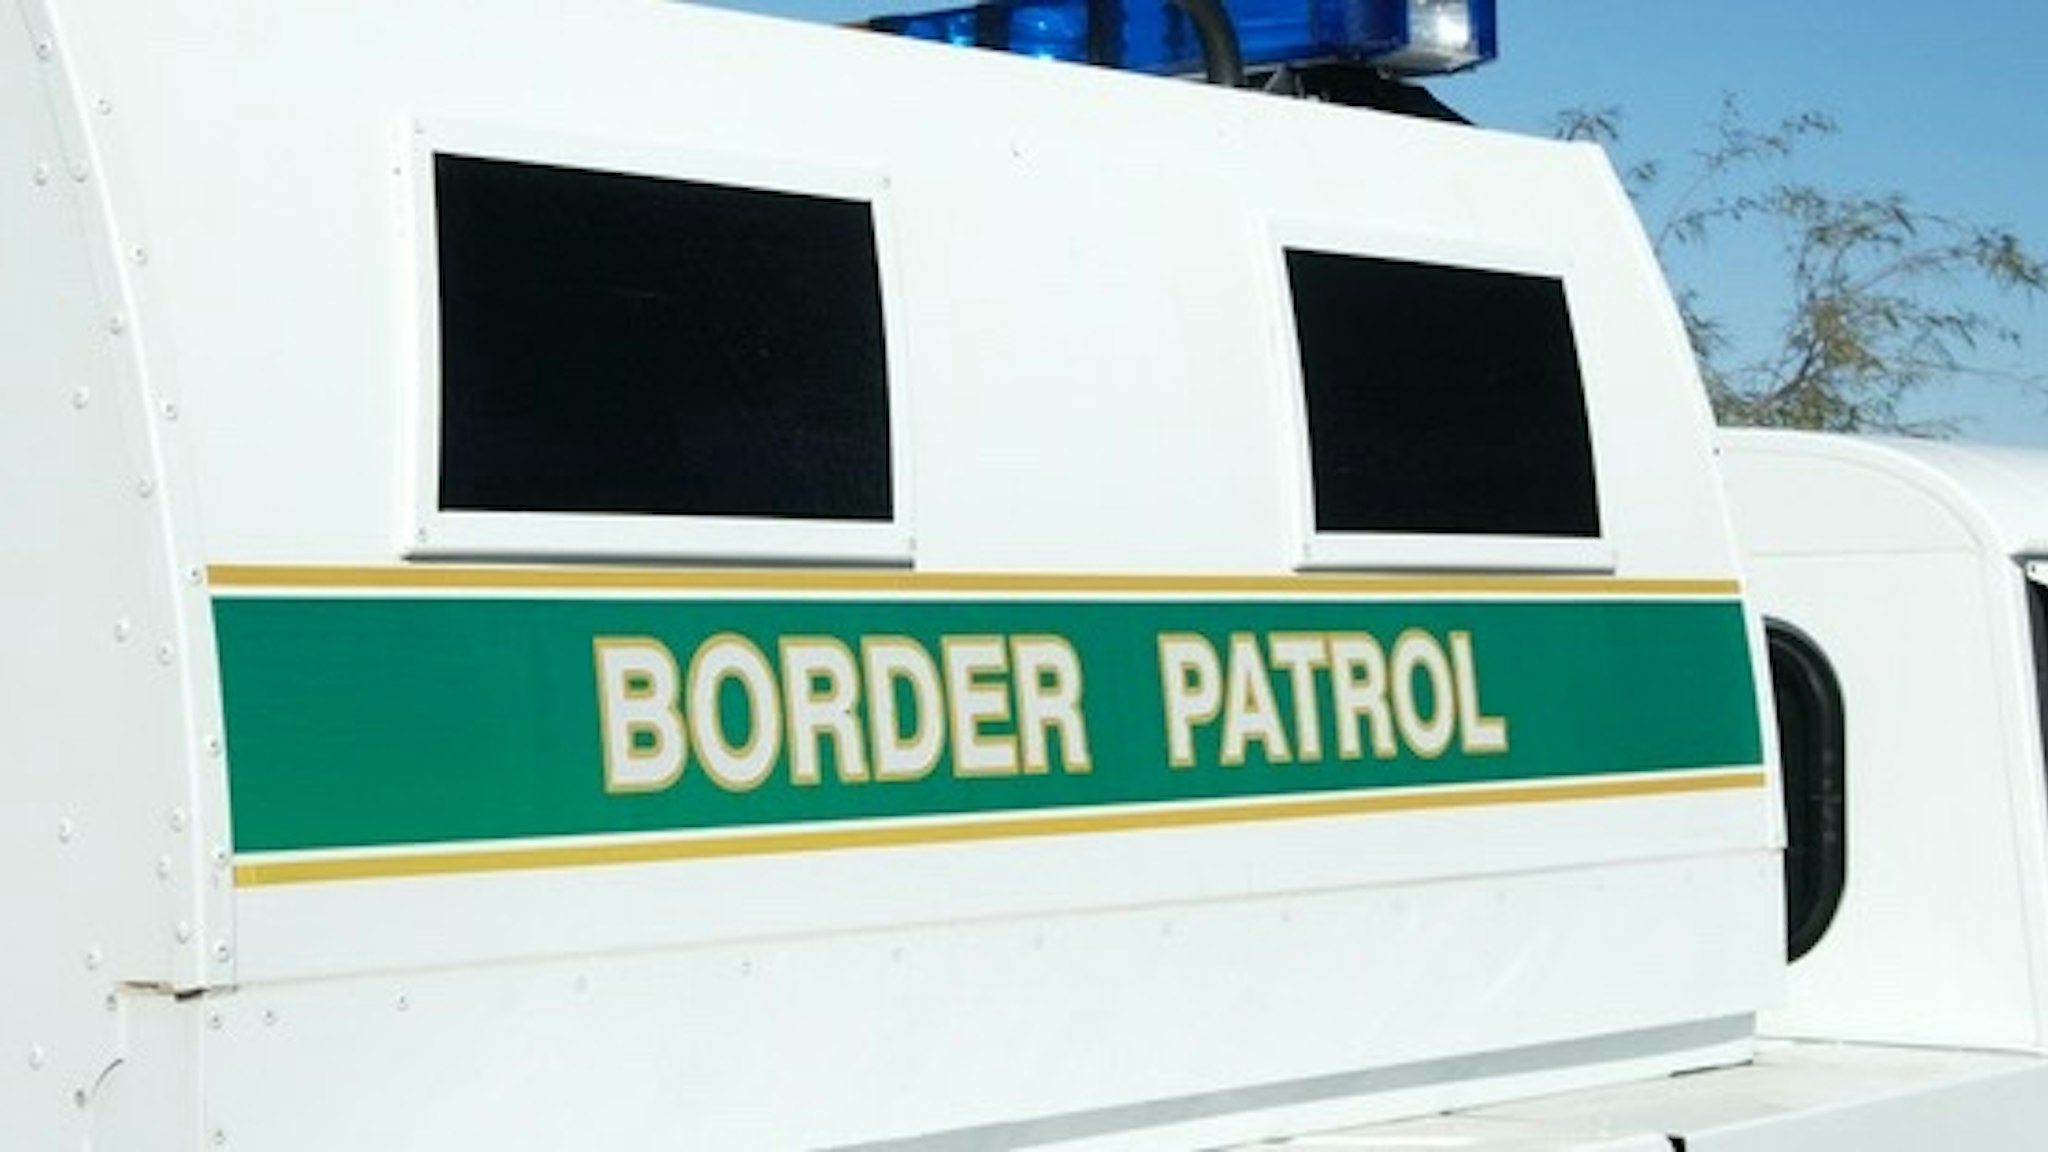 Border Patrol - stock photo